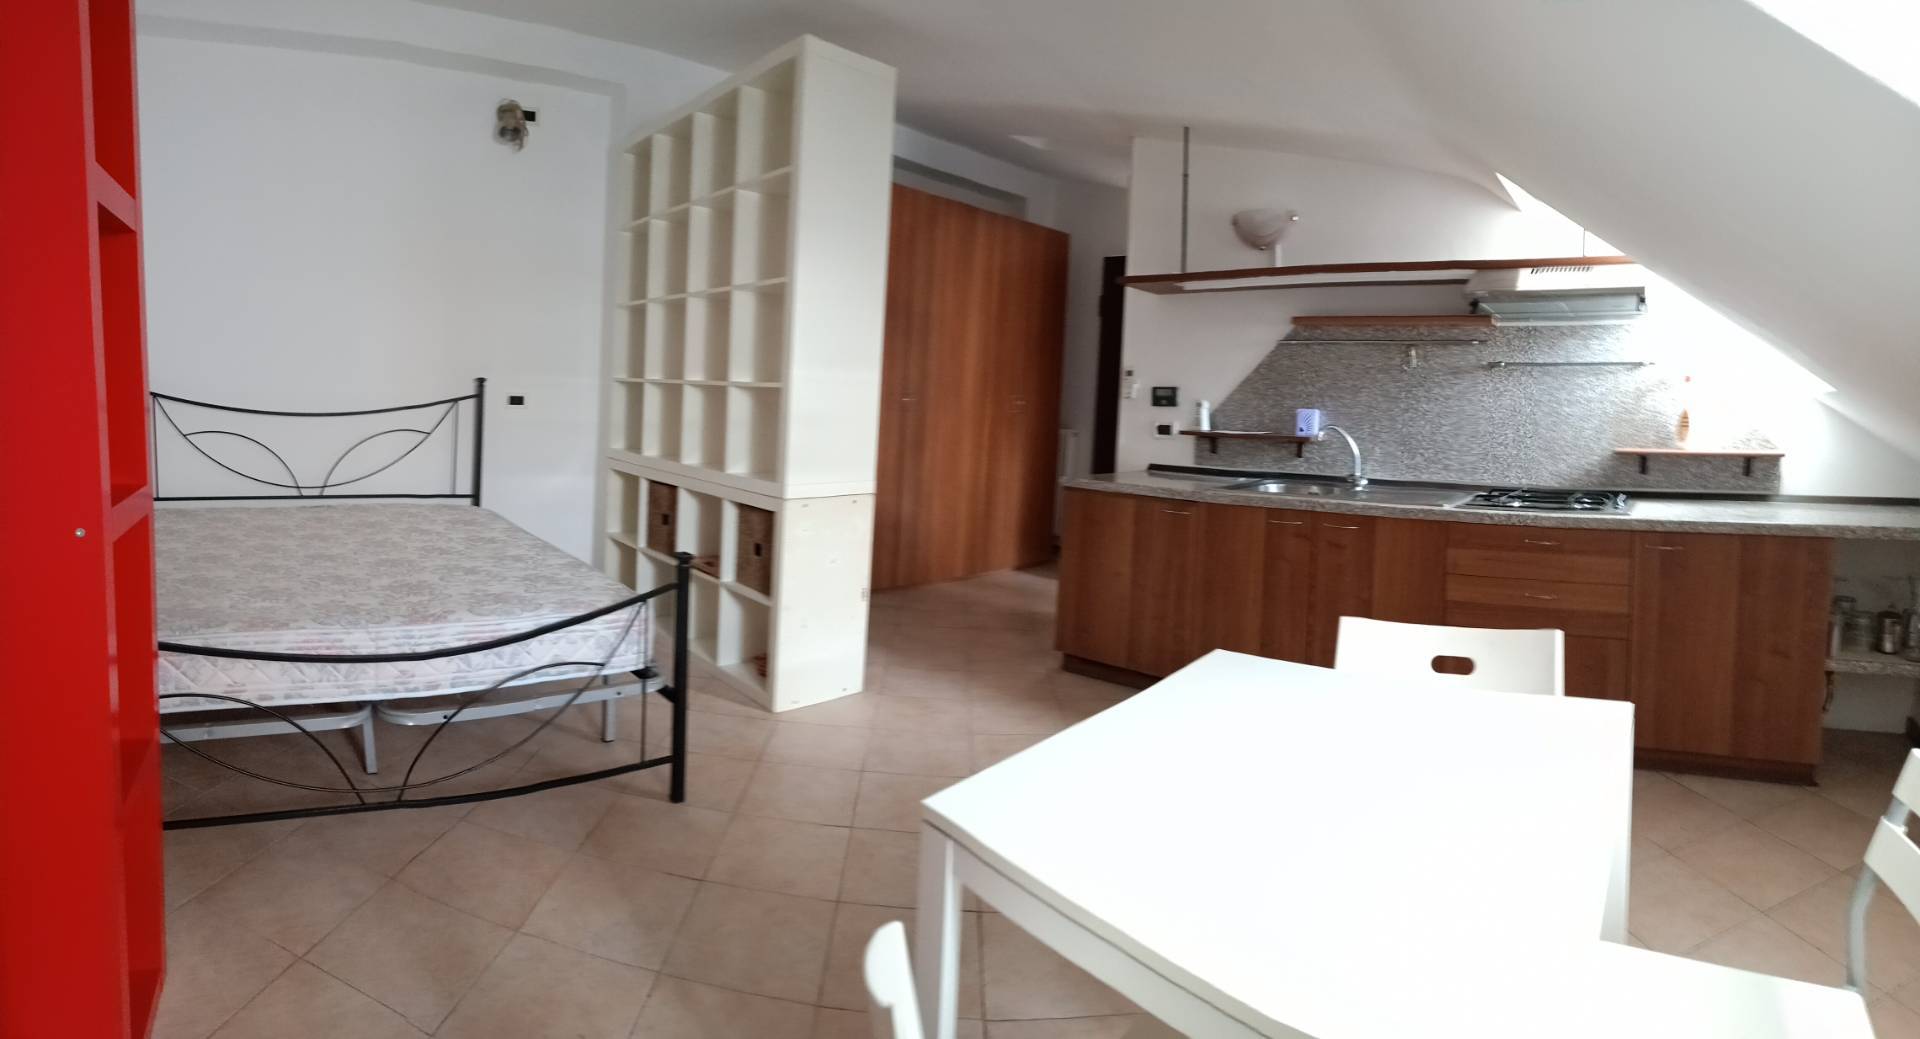 Appartamento, 25 Mq, Affitto - Udine (Udine)